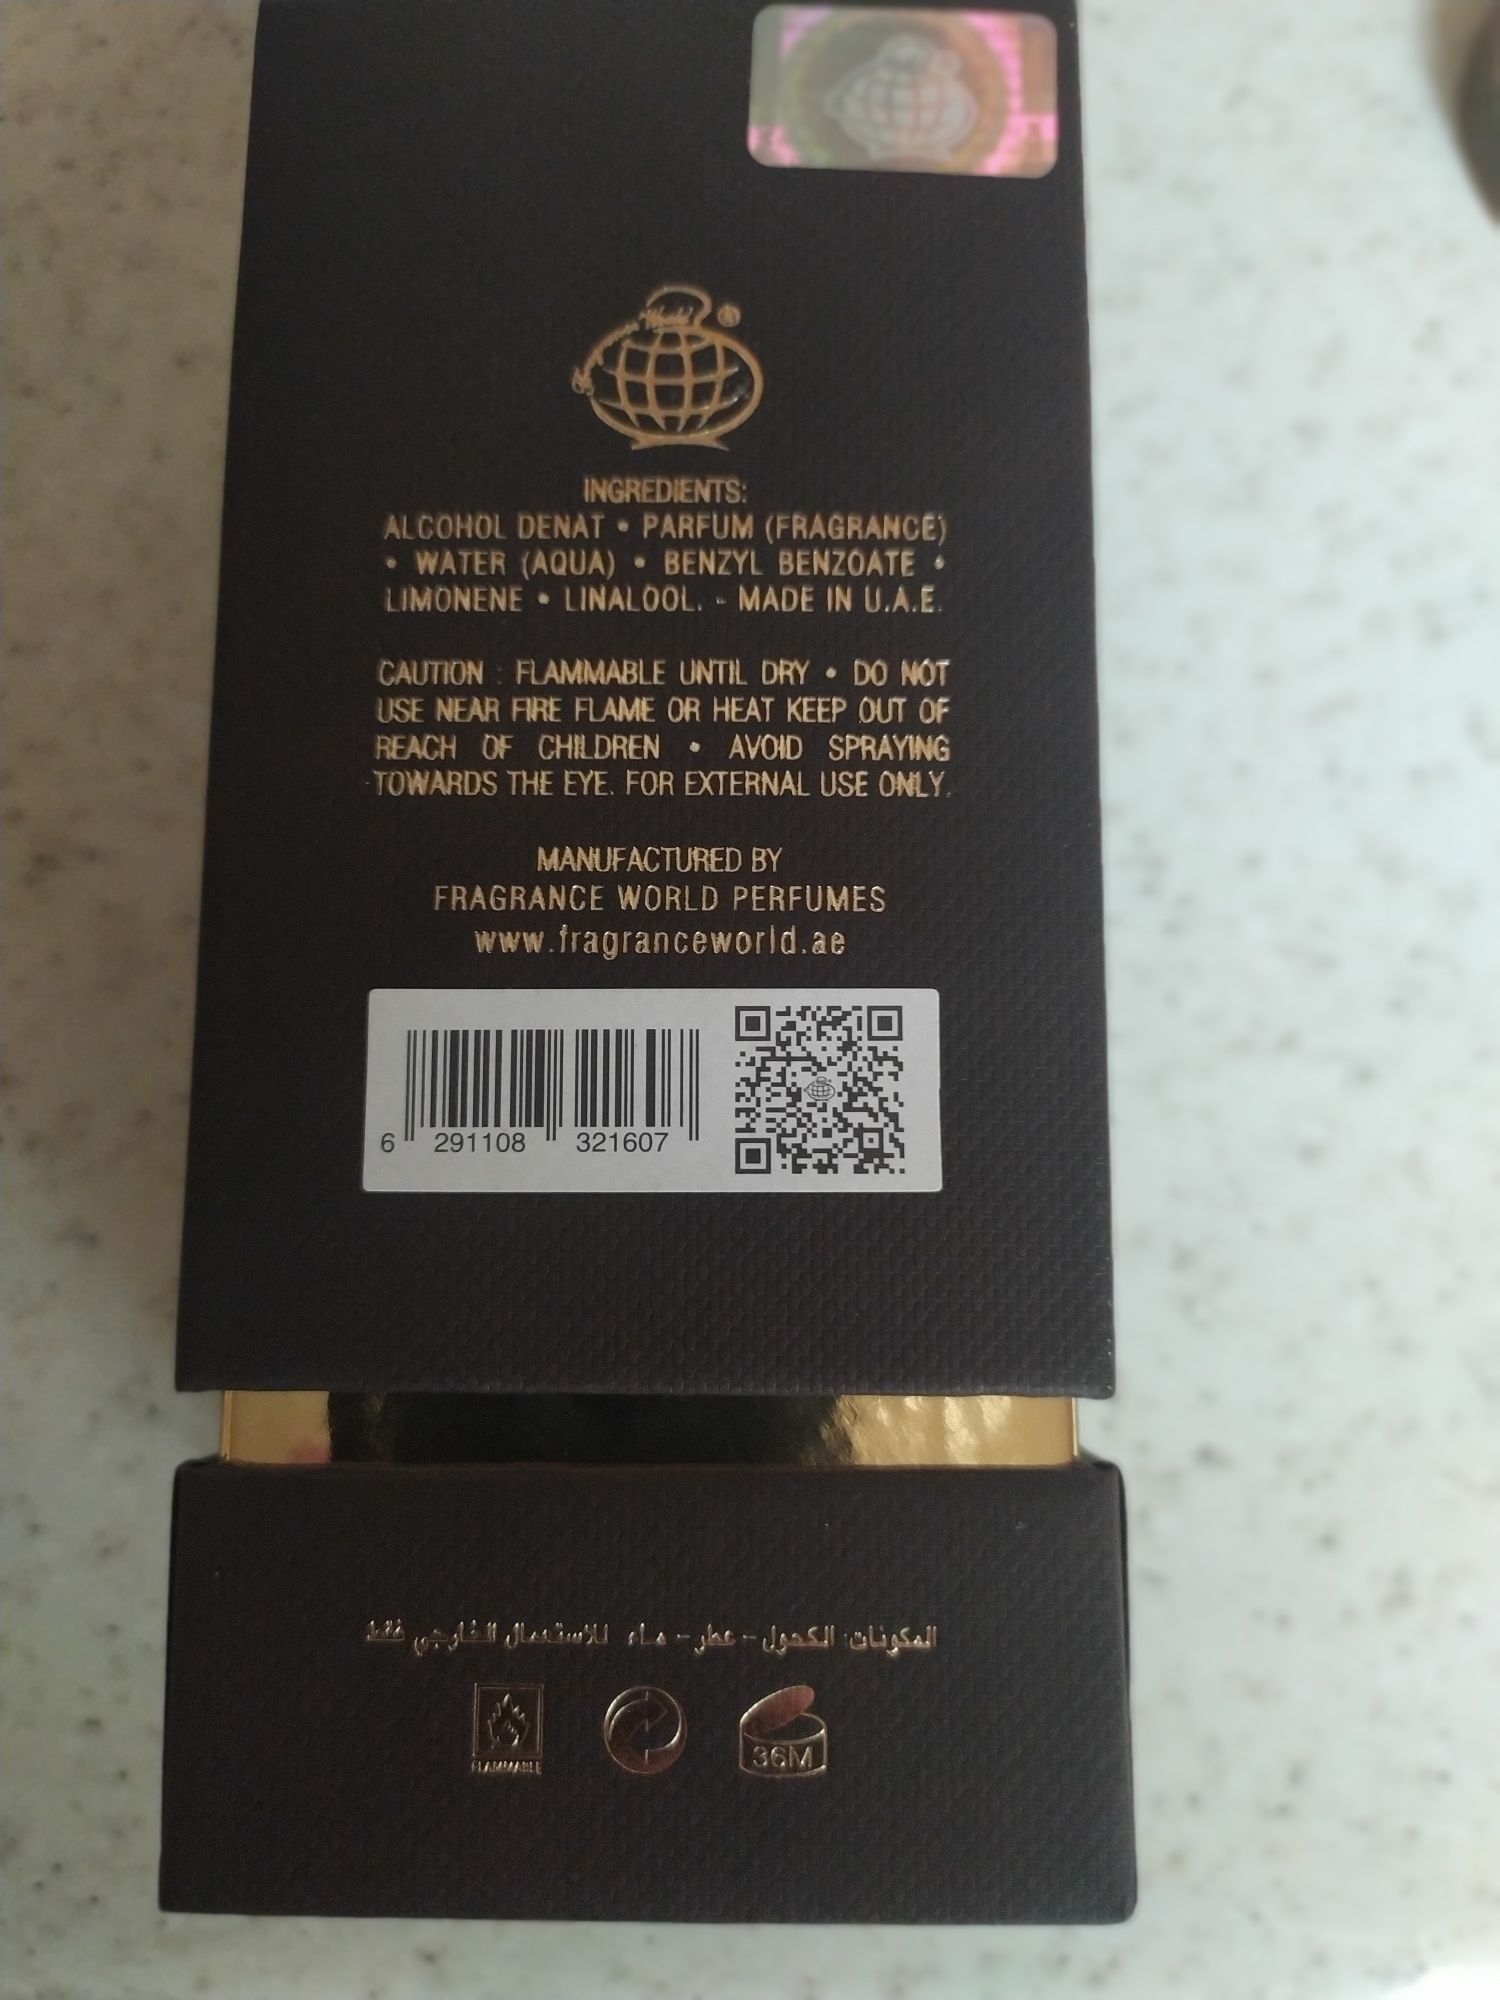 Продается парфюм унисекс Tuscany leathers Dubai